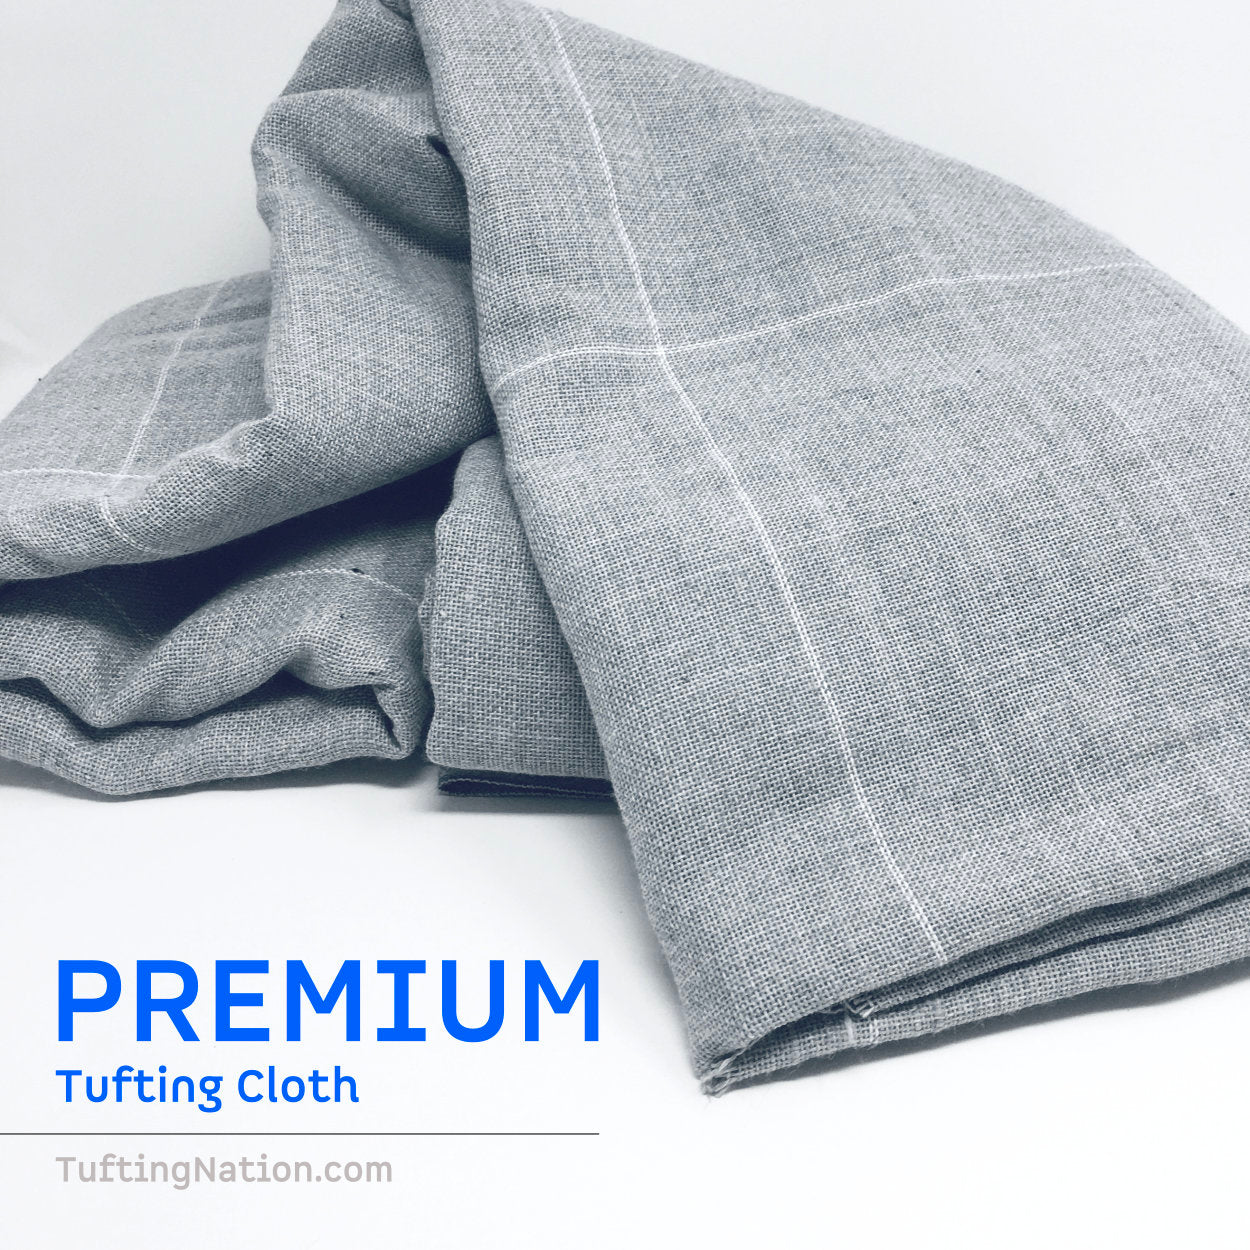 Primary Tufting Cloth 400x400cm - Tufting Europe